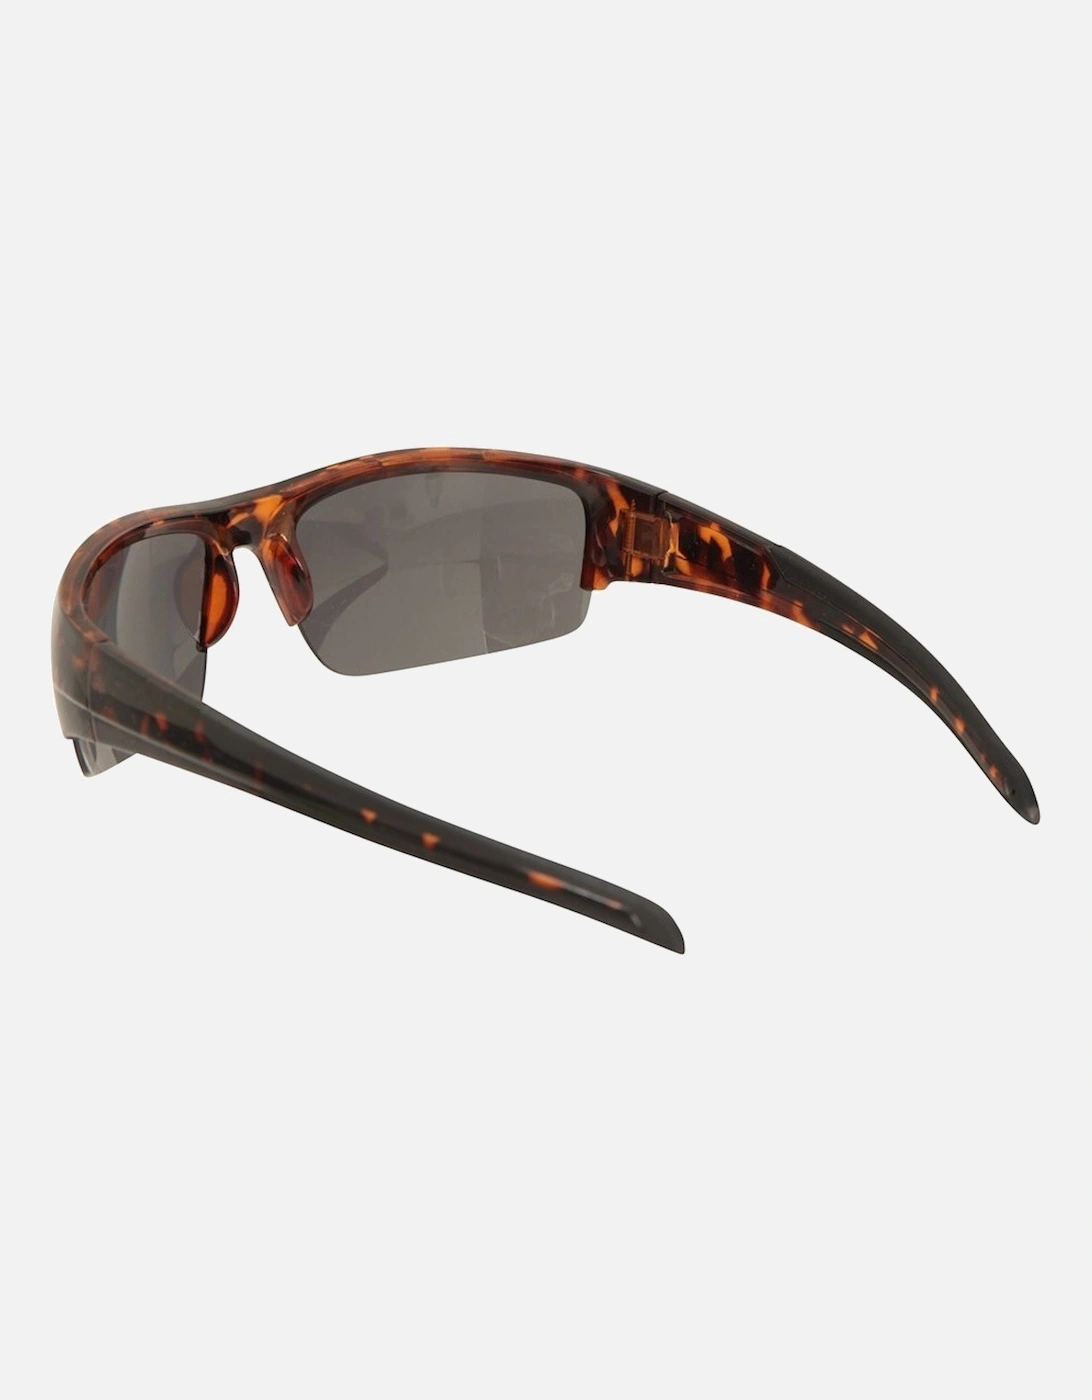 Unisex Adult Hampshire Active Sunglasses